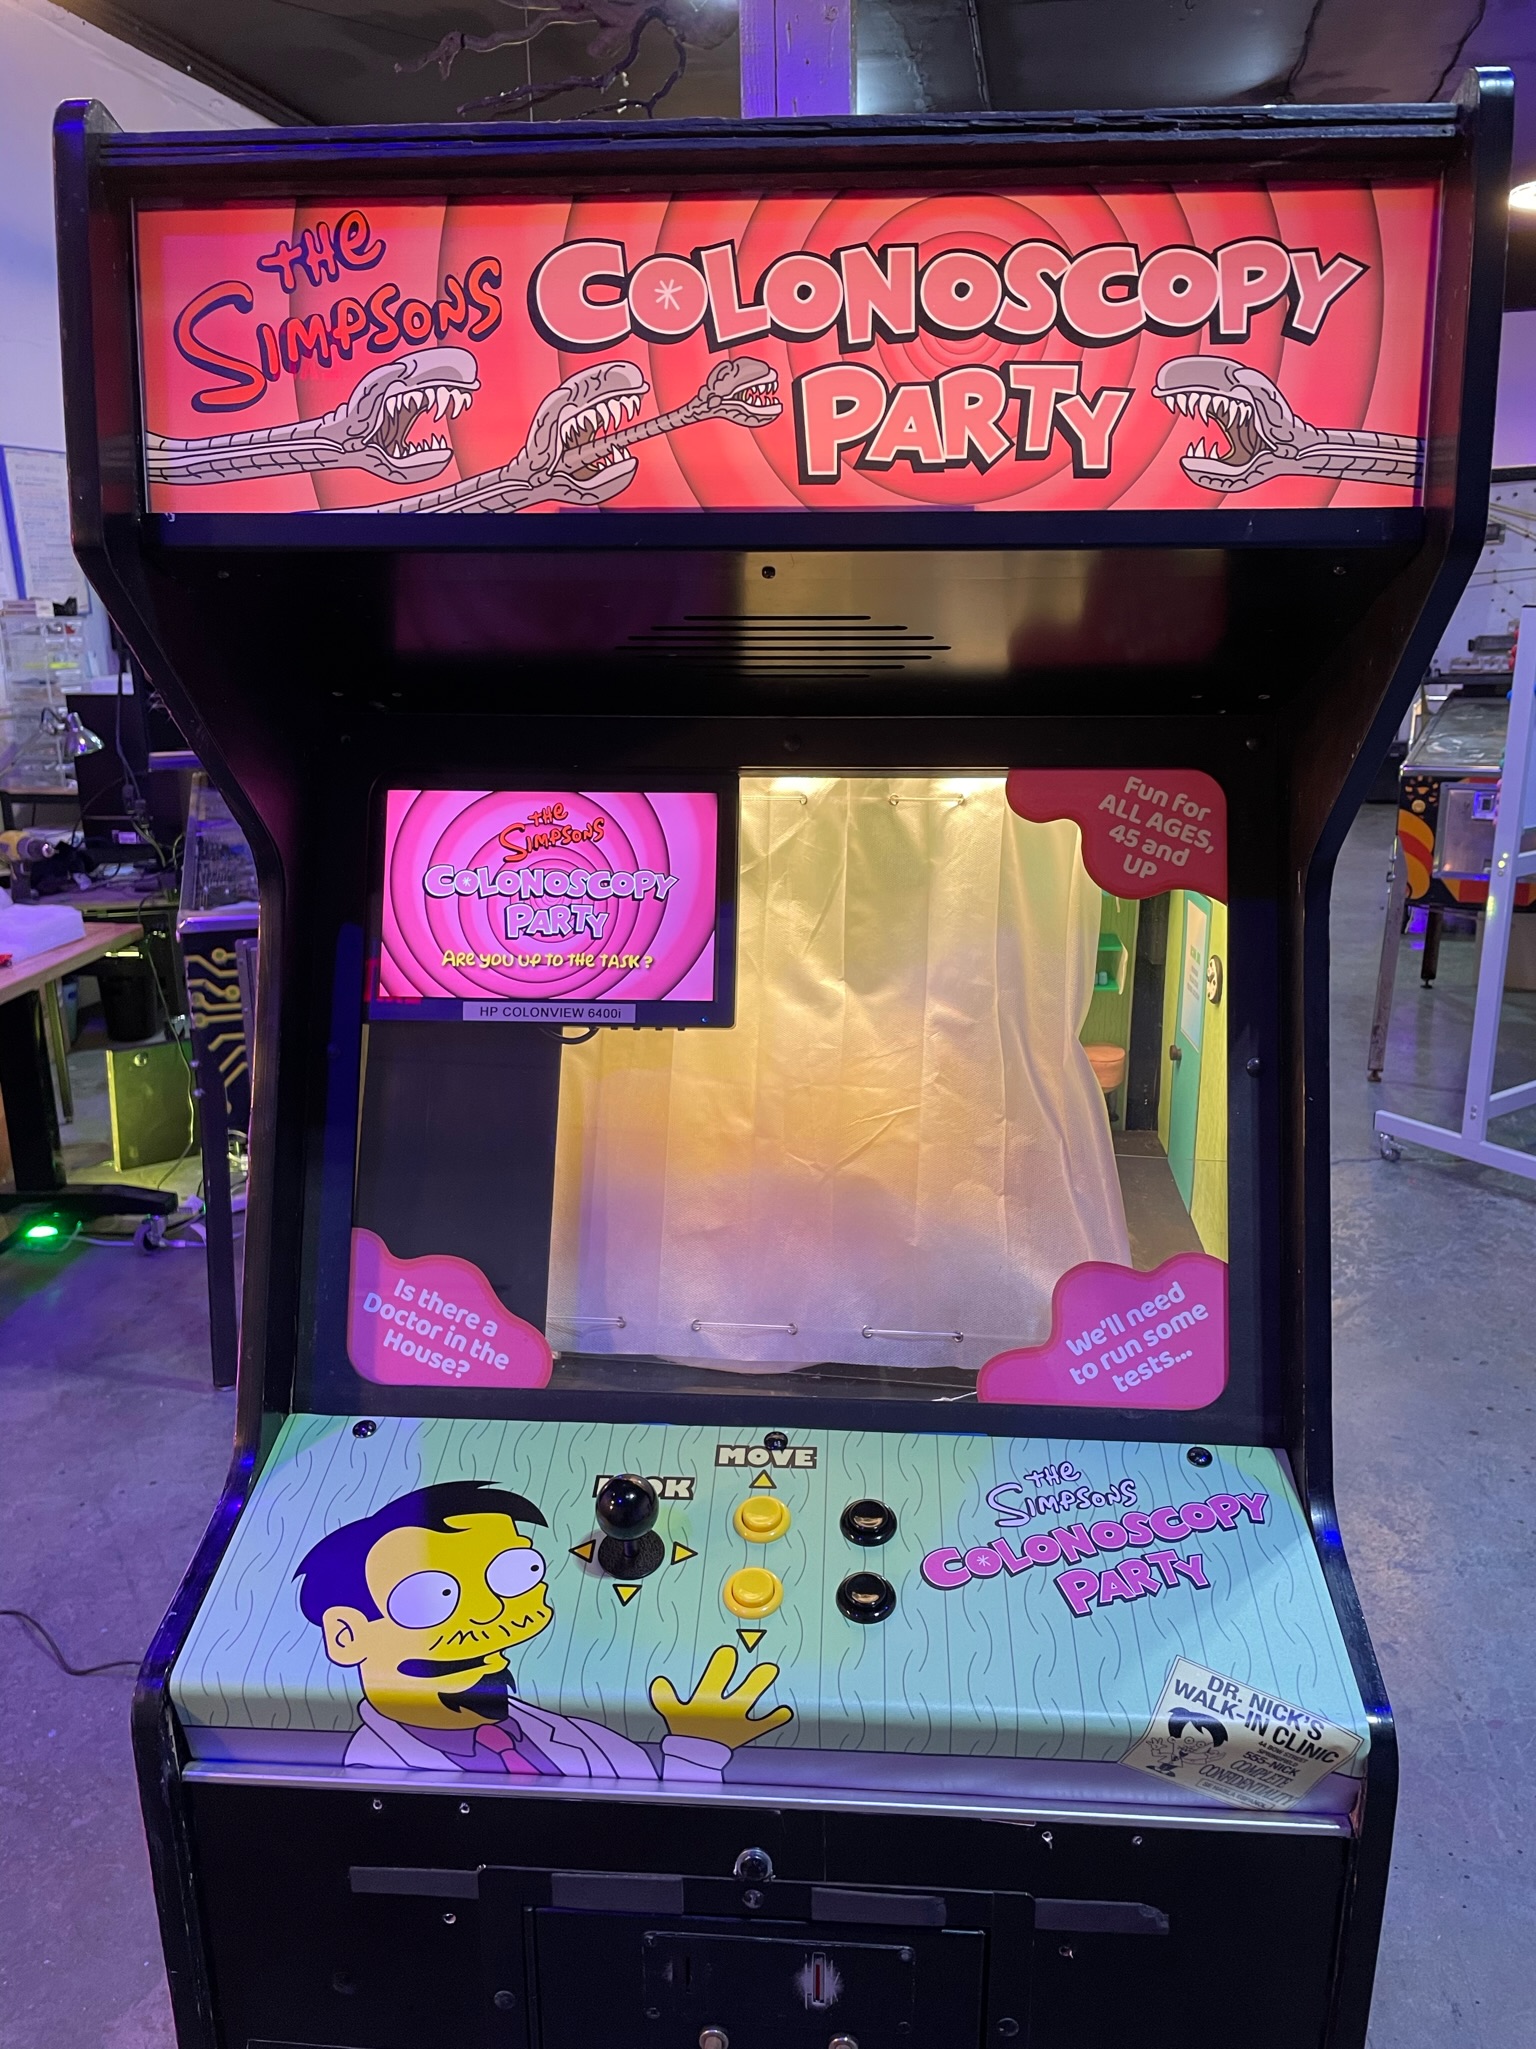 The Simpsons Colonoscopy Party